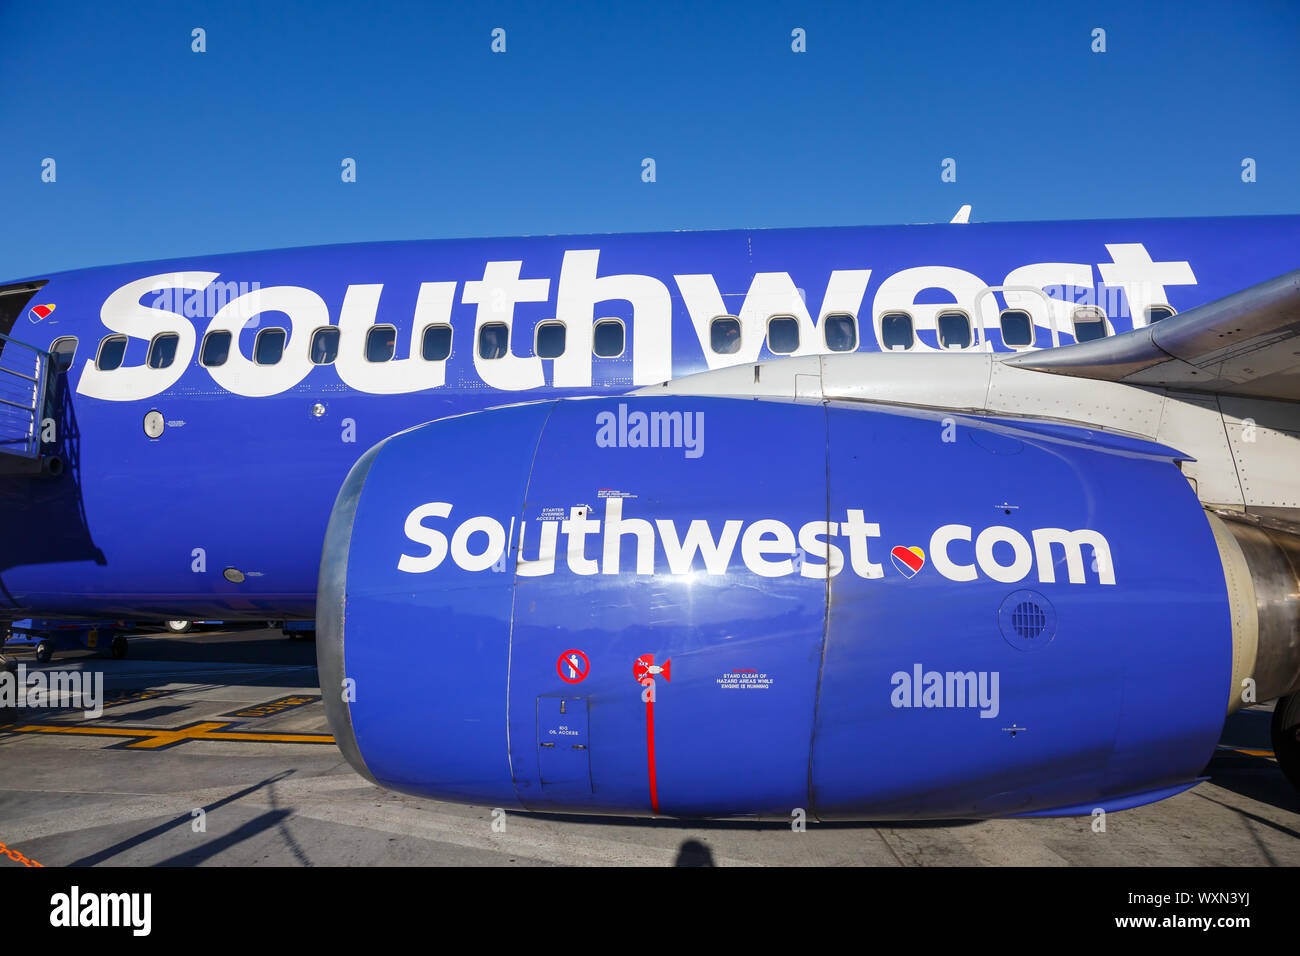 Burbank, California – April 10, 2019: CFM56 engine of a Southwest Airlines Boeing 737-700 airplane at Burbank airport (BUR) in California. Stock Photo